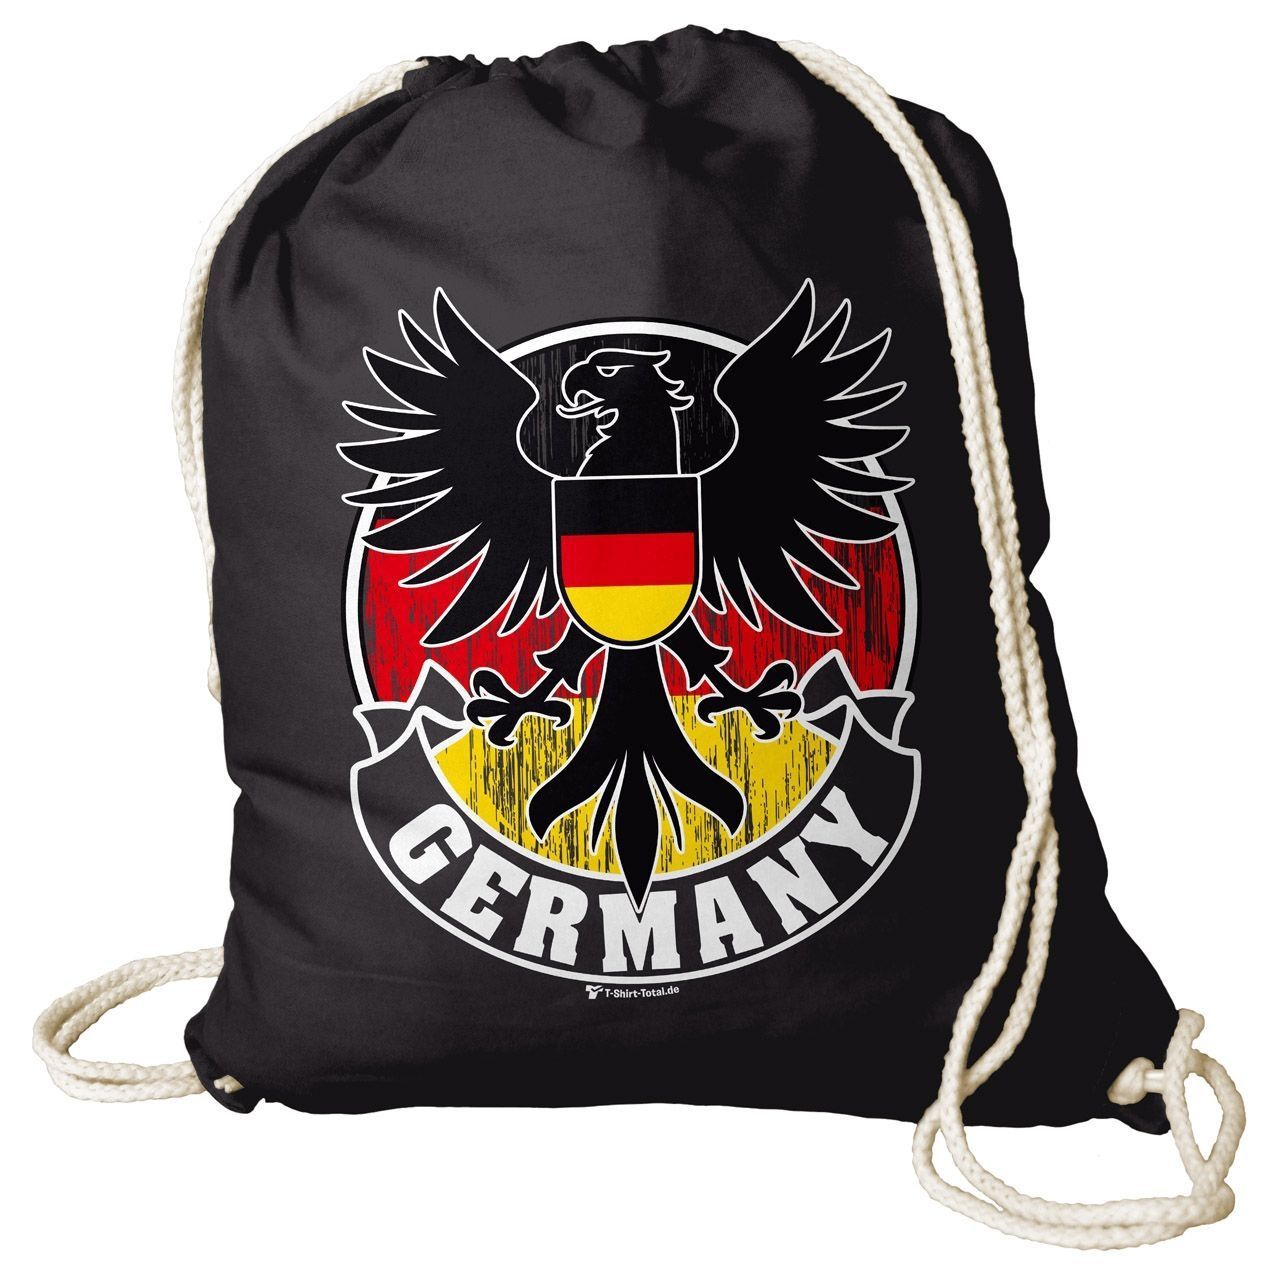 Germany Adler Rucksack Beutel schwarz